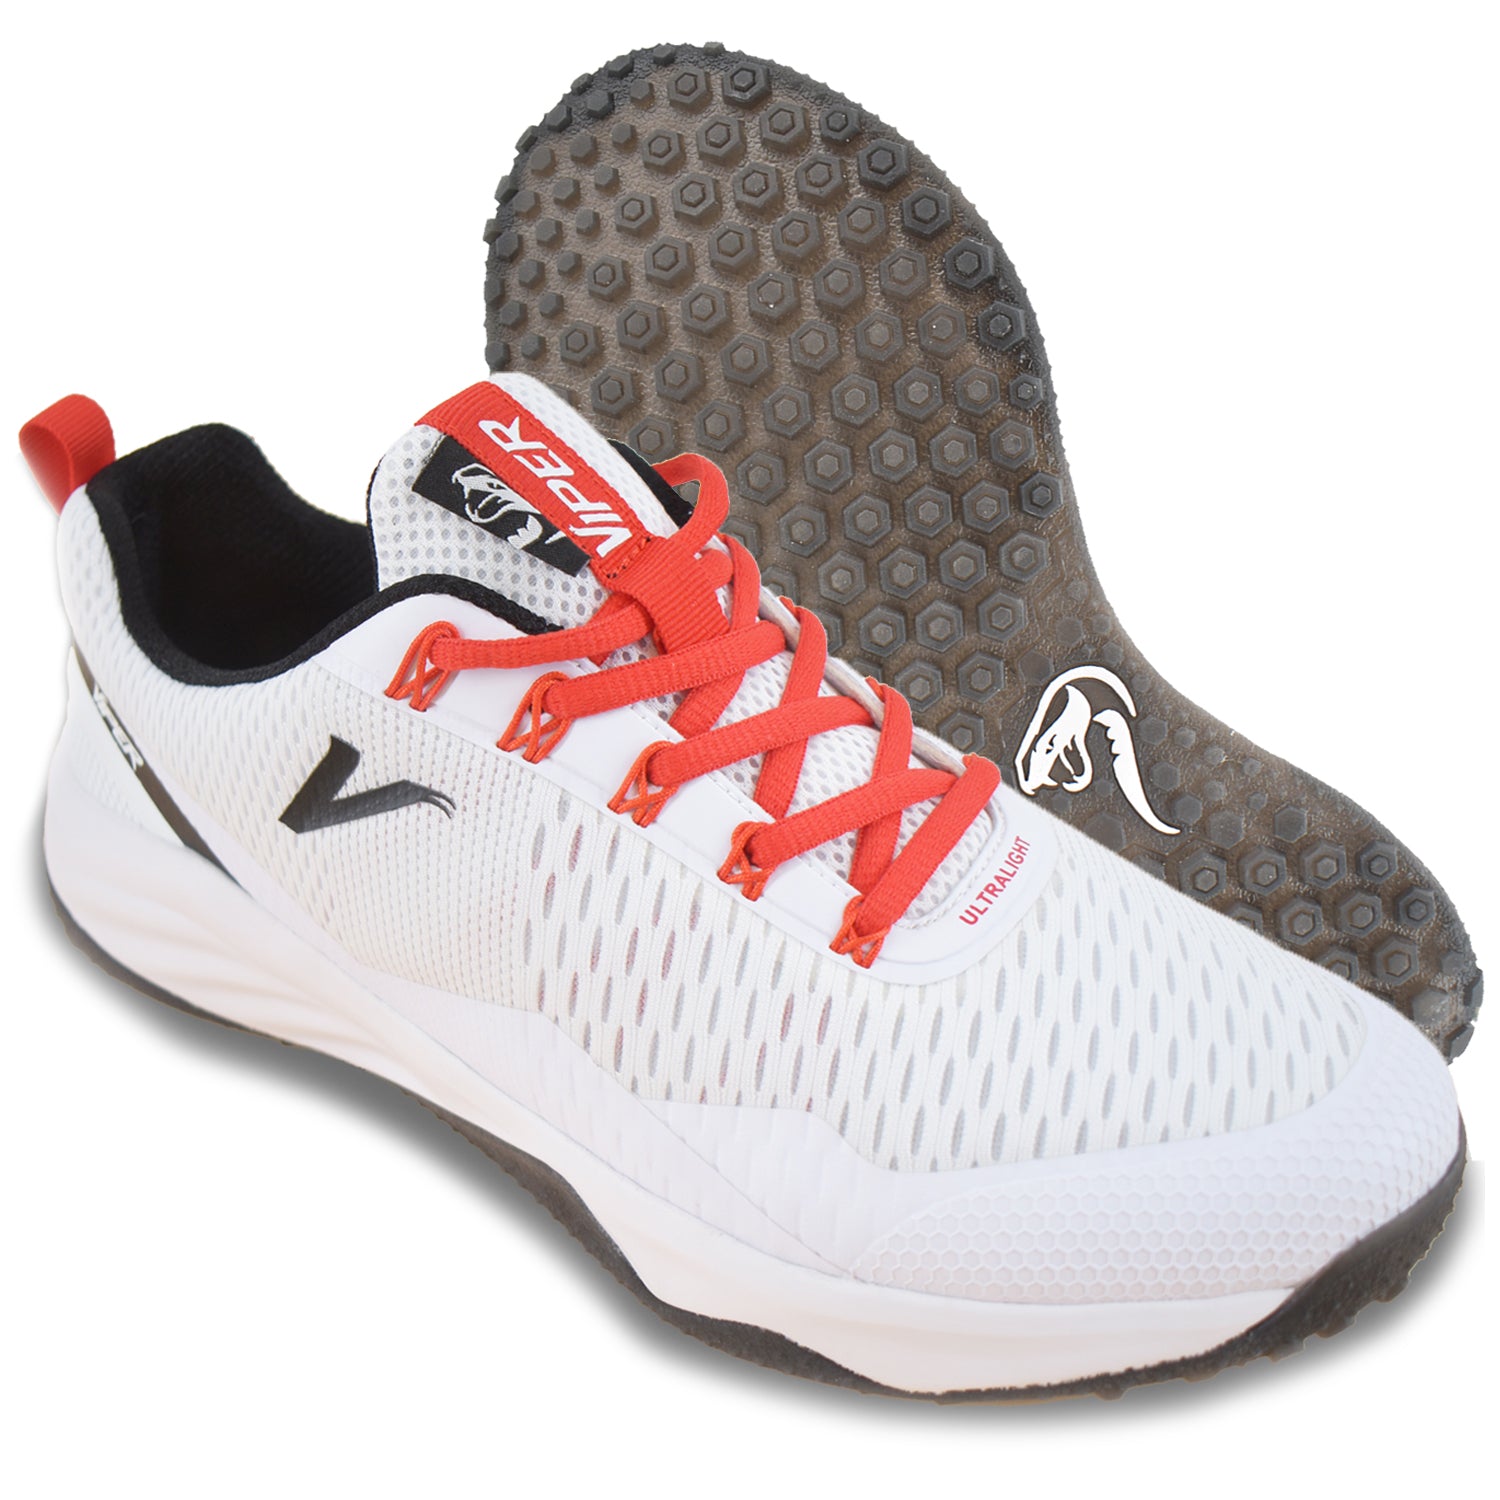 Viper Ultralight Turf Shoe (White/Red/Black)